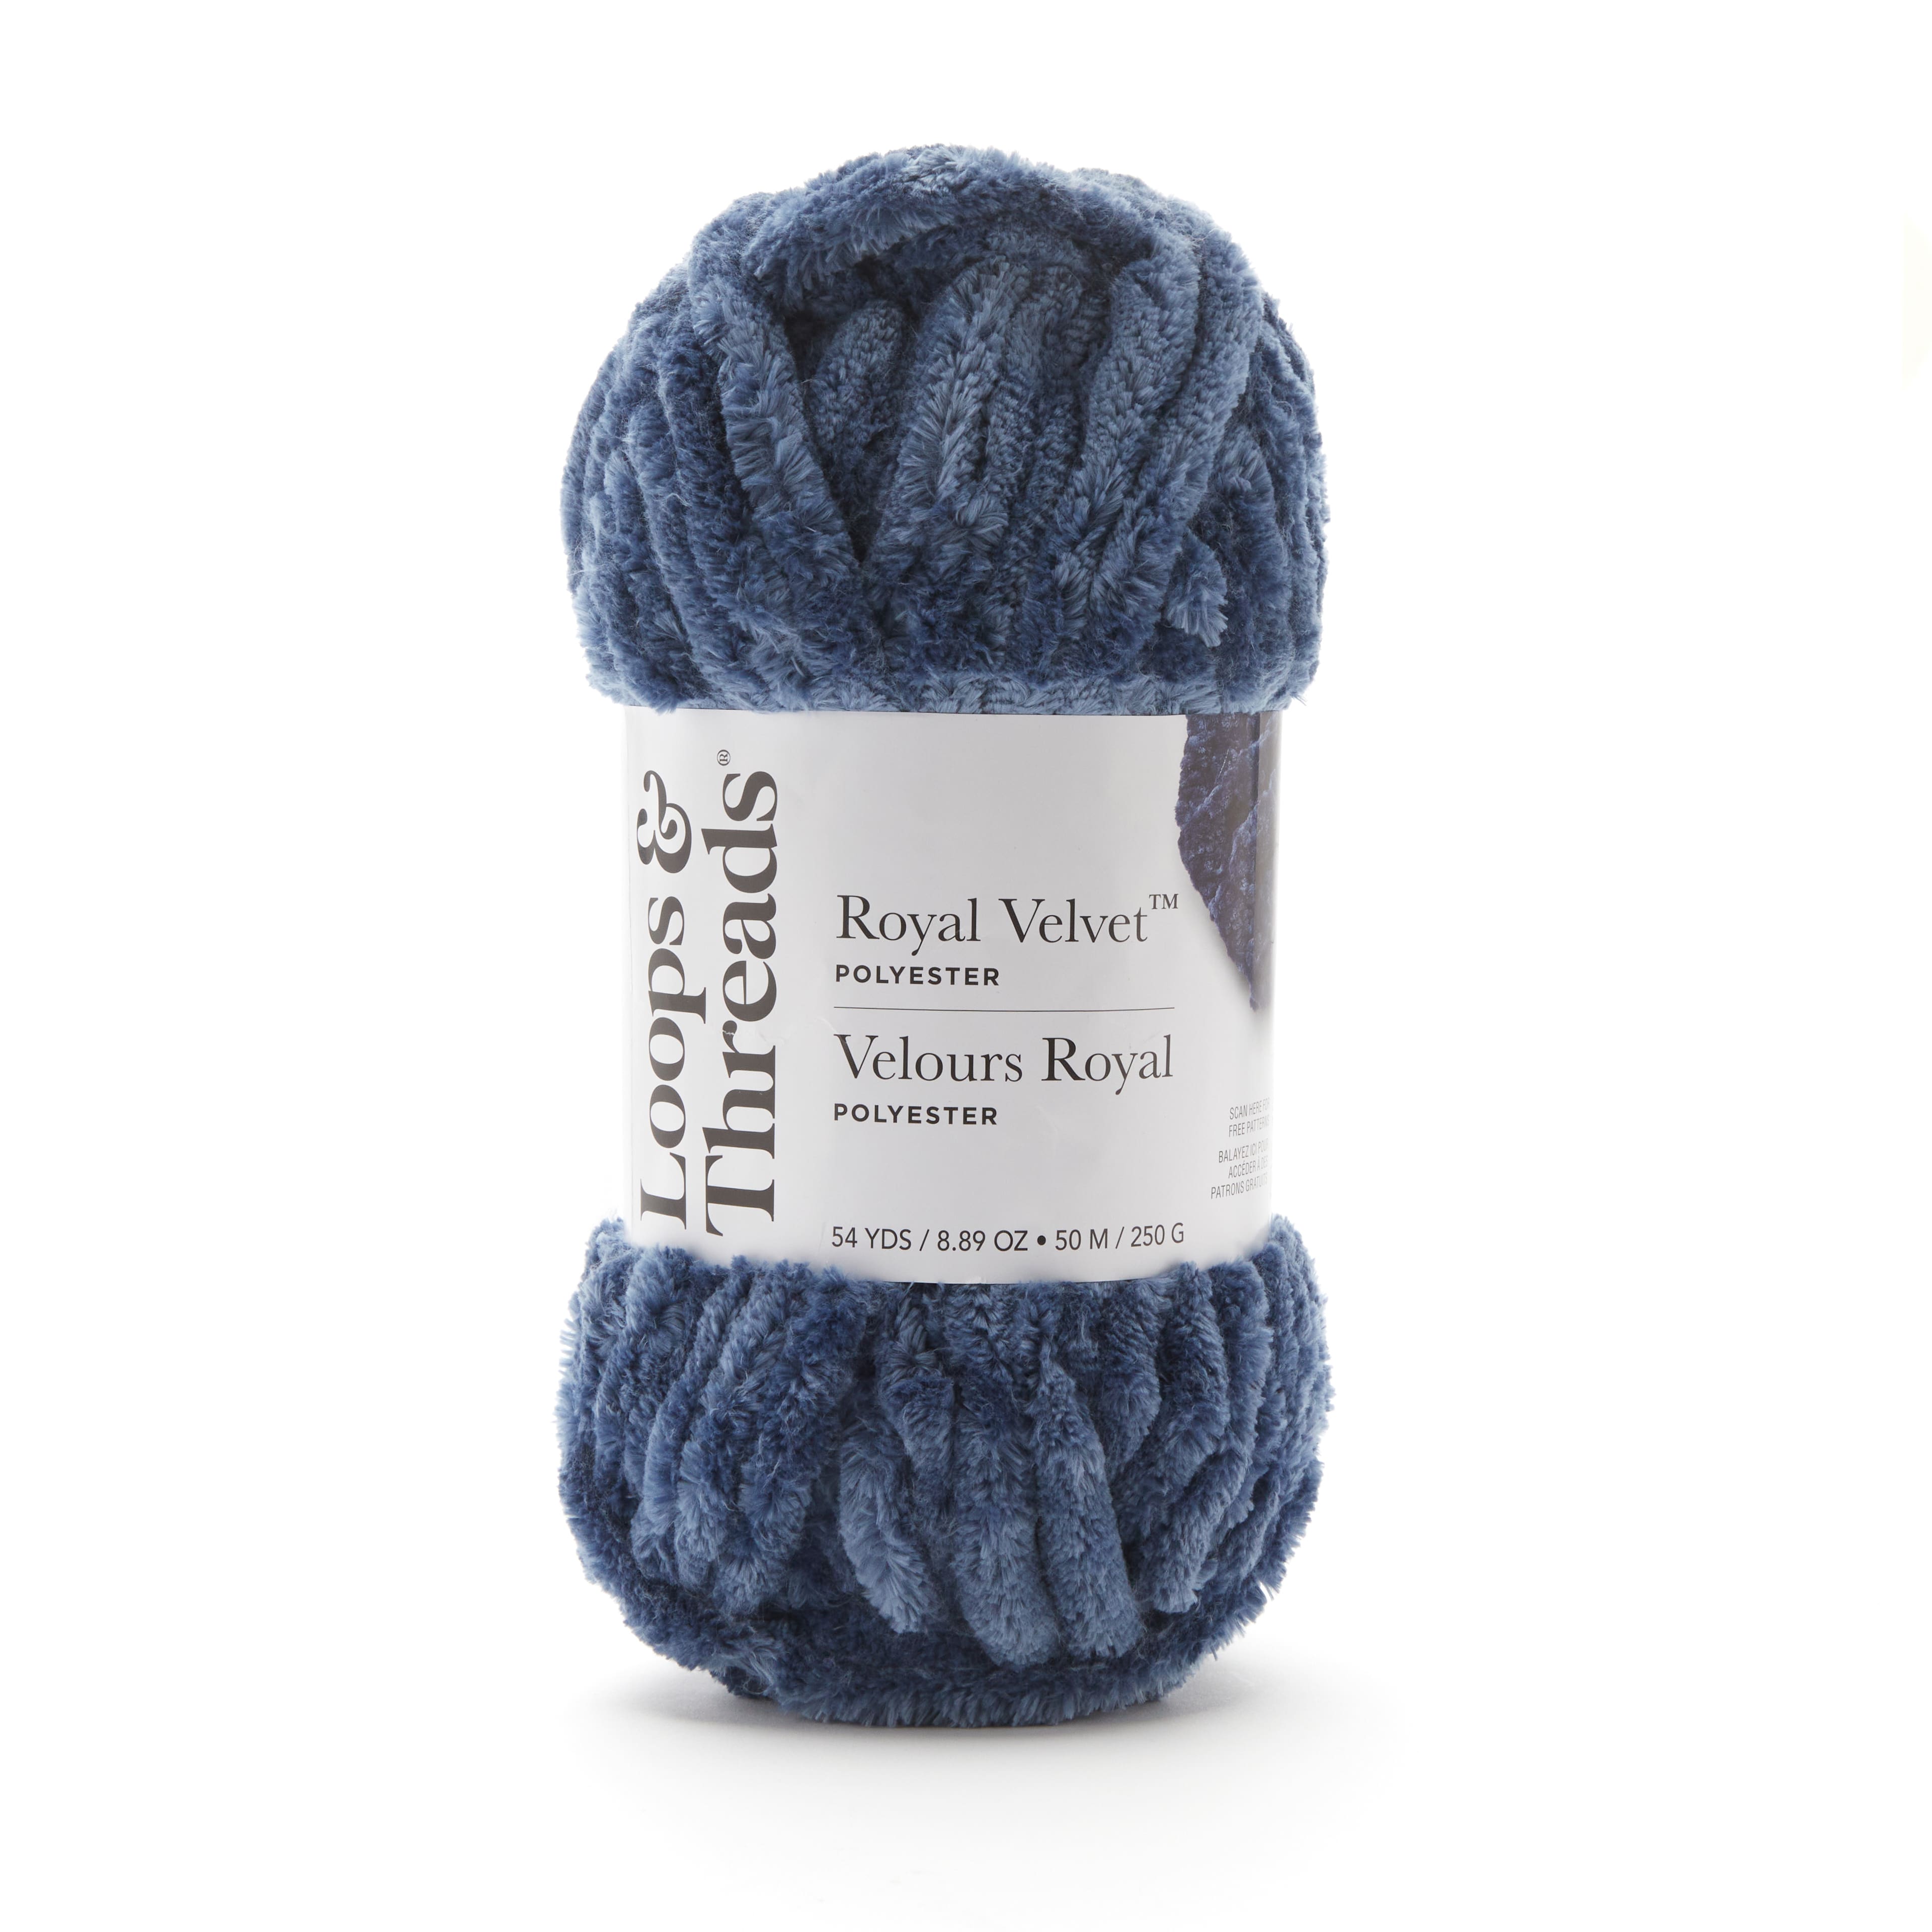 Royal Velvet™ Yarn by Loops & Threads®